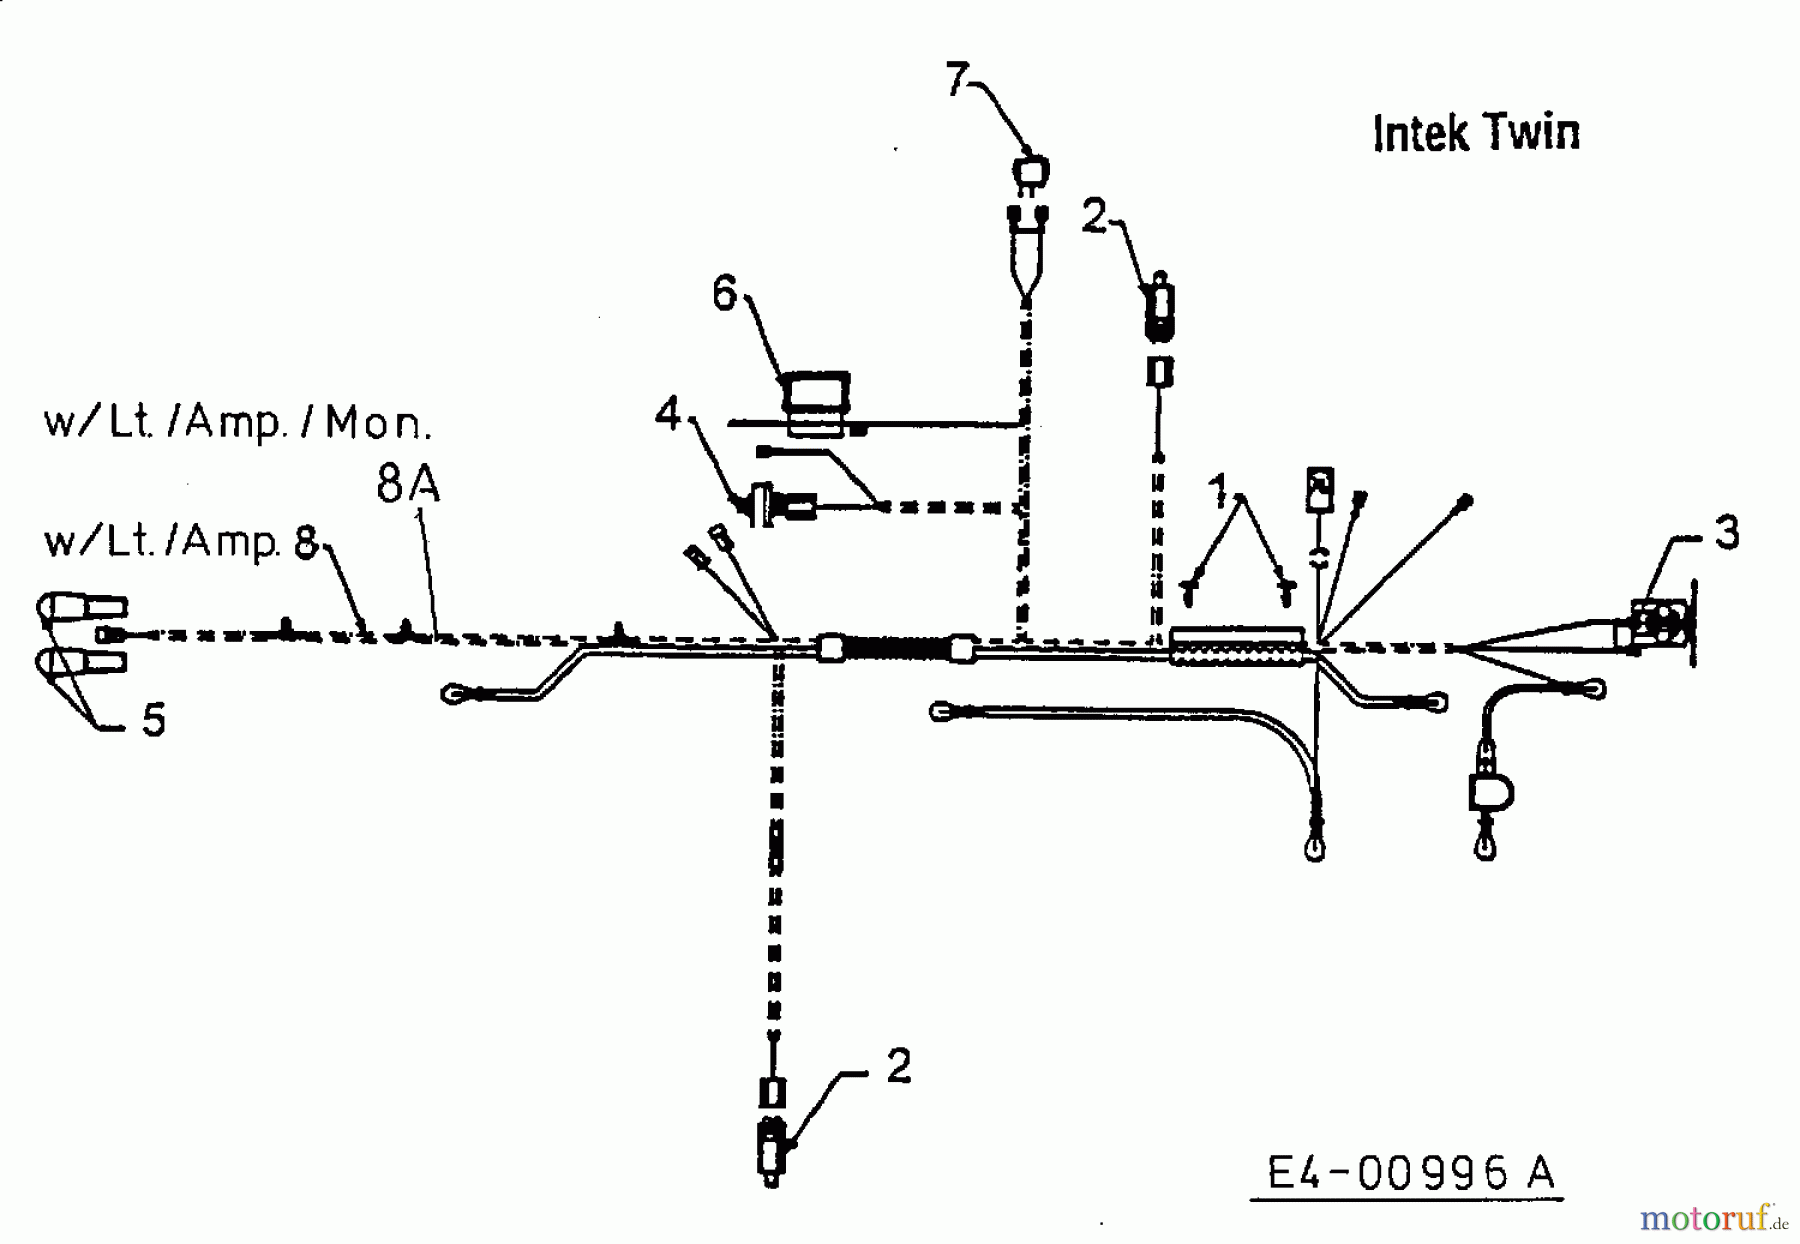  MTD Lawn tractors H/165 13AO698G678  (2000) Wiring diagram Intek Twin